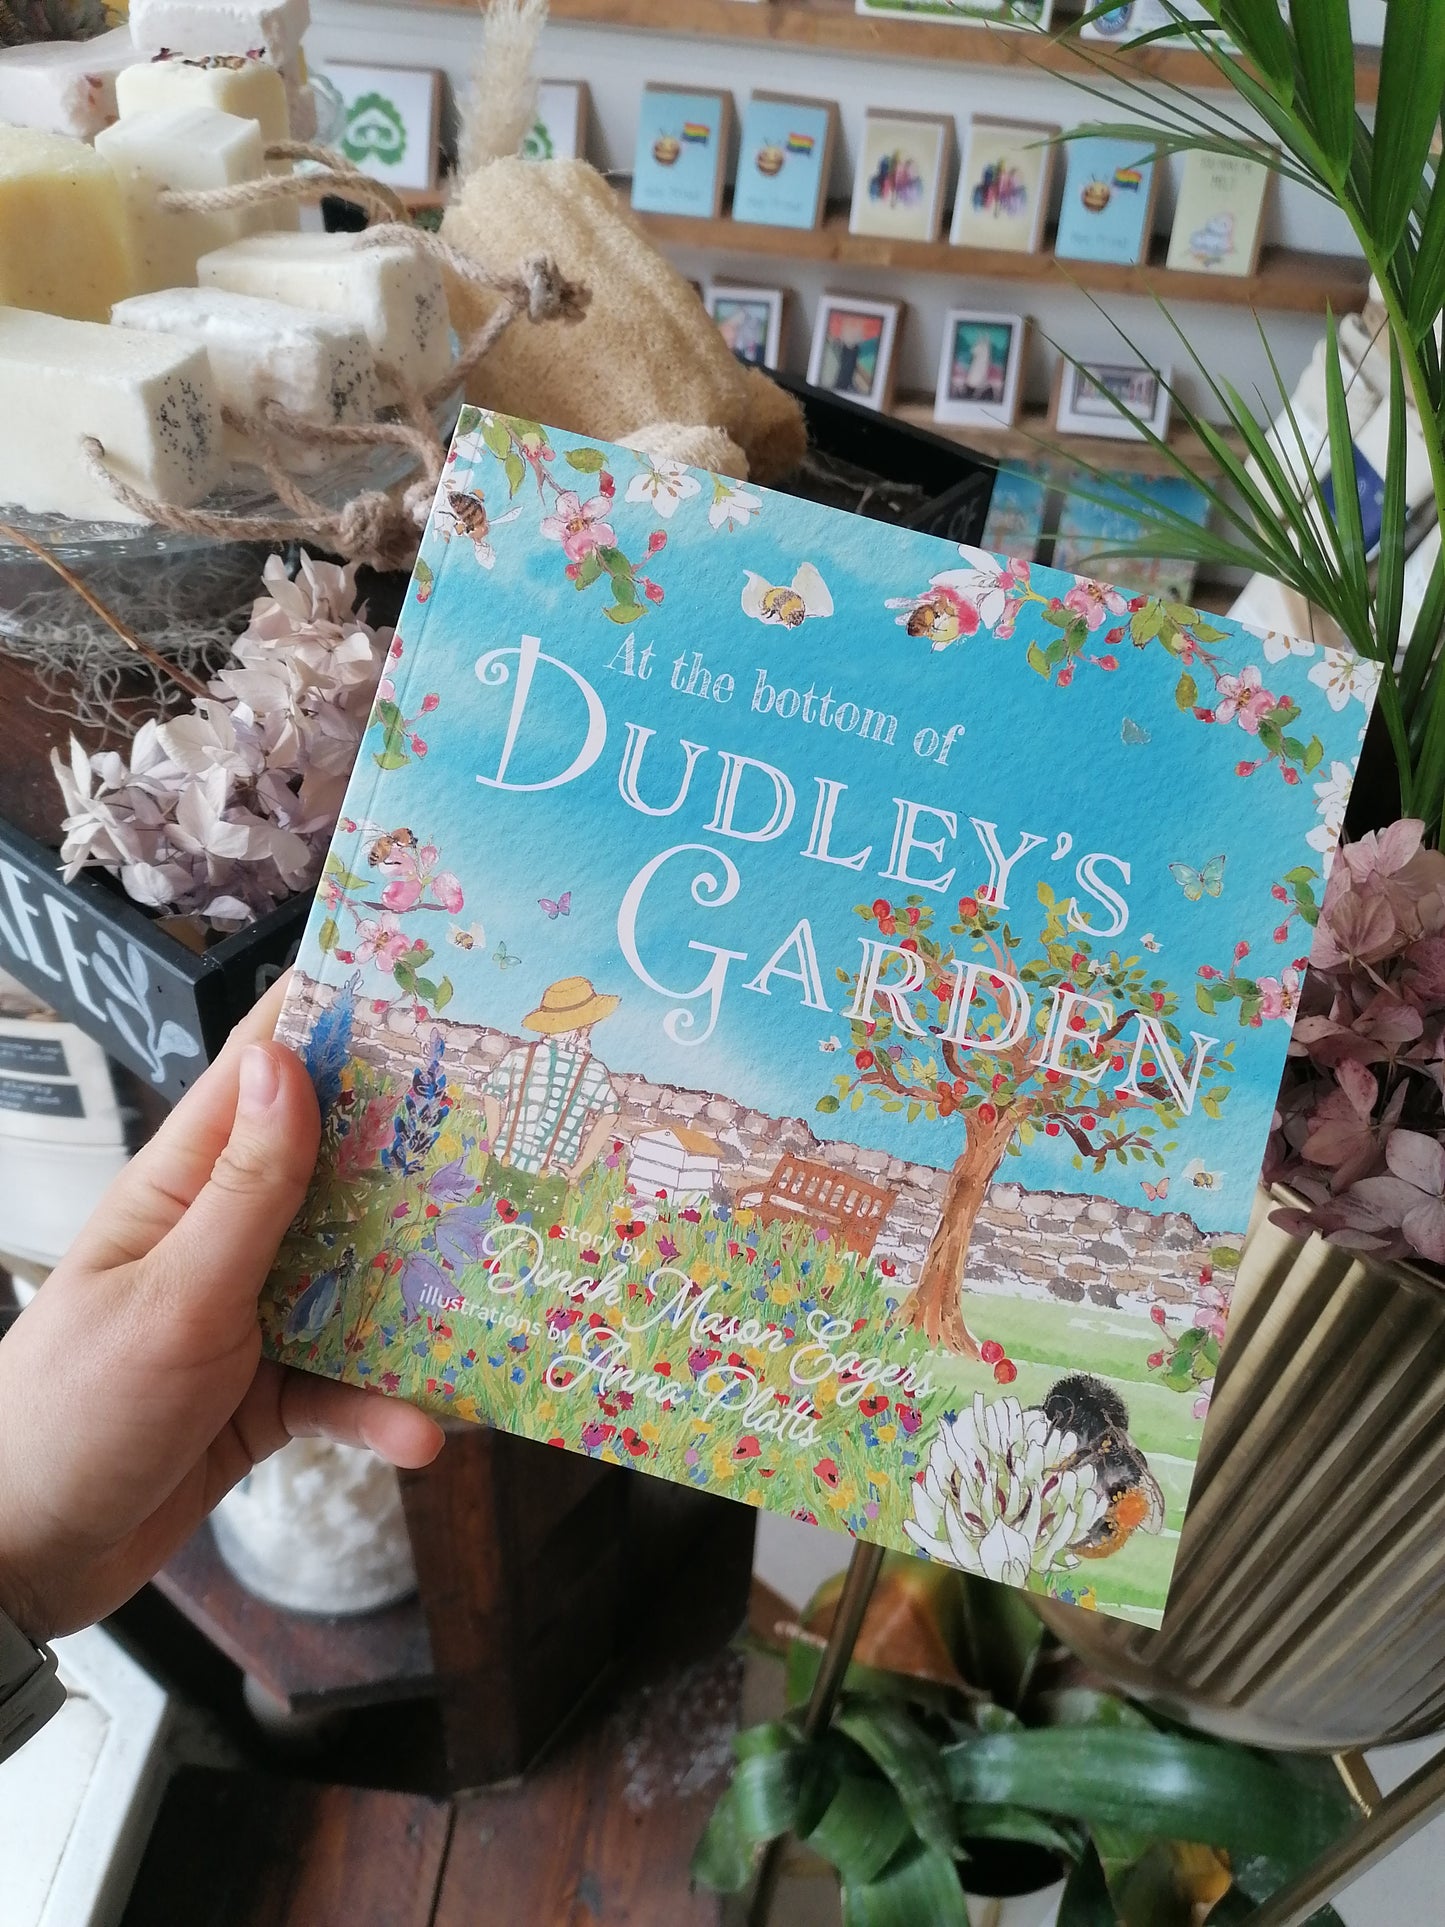 Dudley’s Garden Book